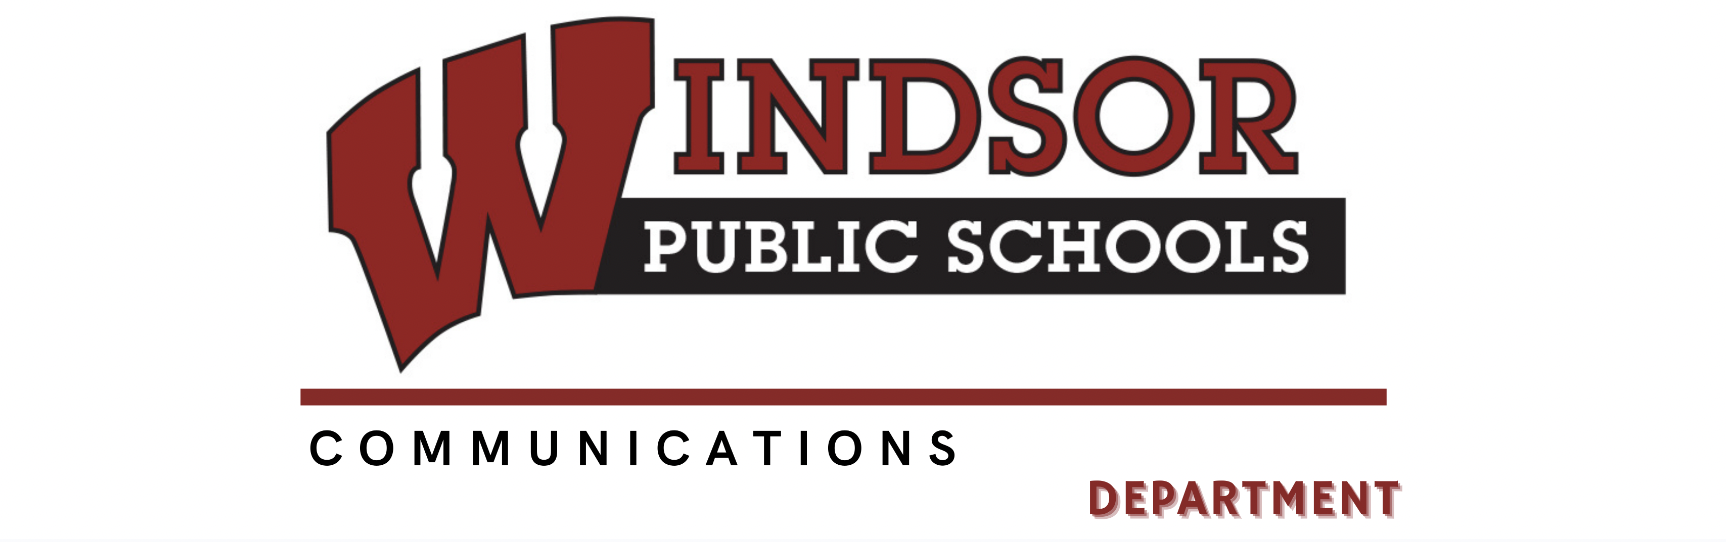 Windsor Public Schools Logo Communications department